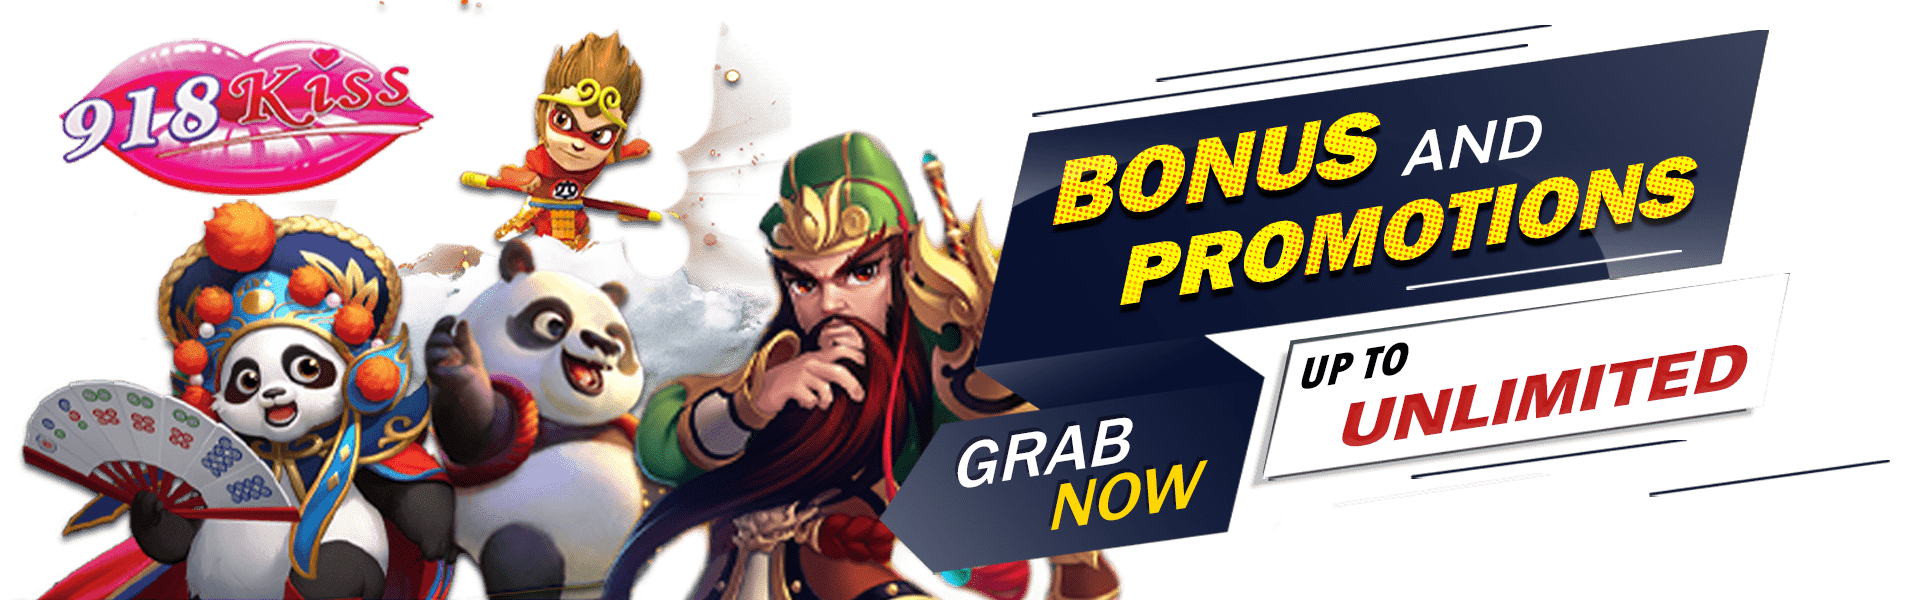 918kiss bonus and promotion banner